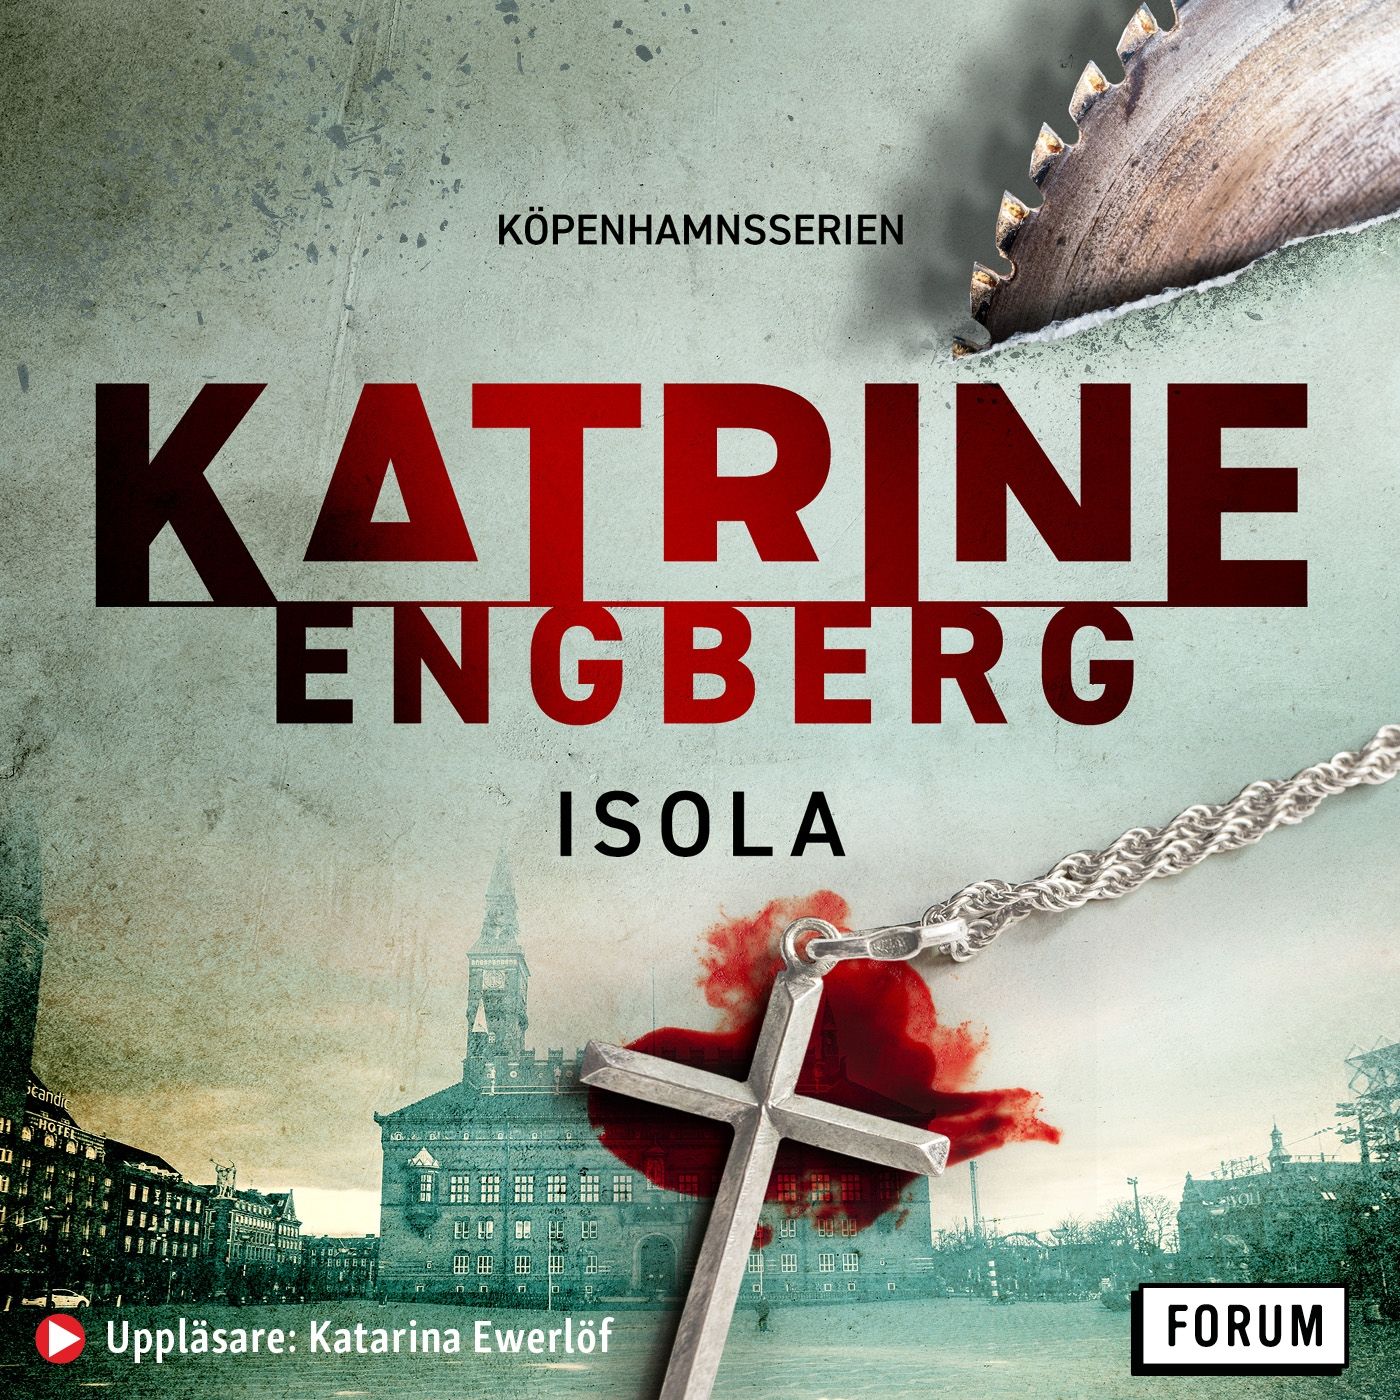 Isola, audiobook by Katrine Engberg